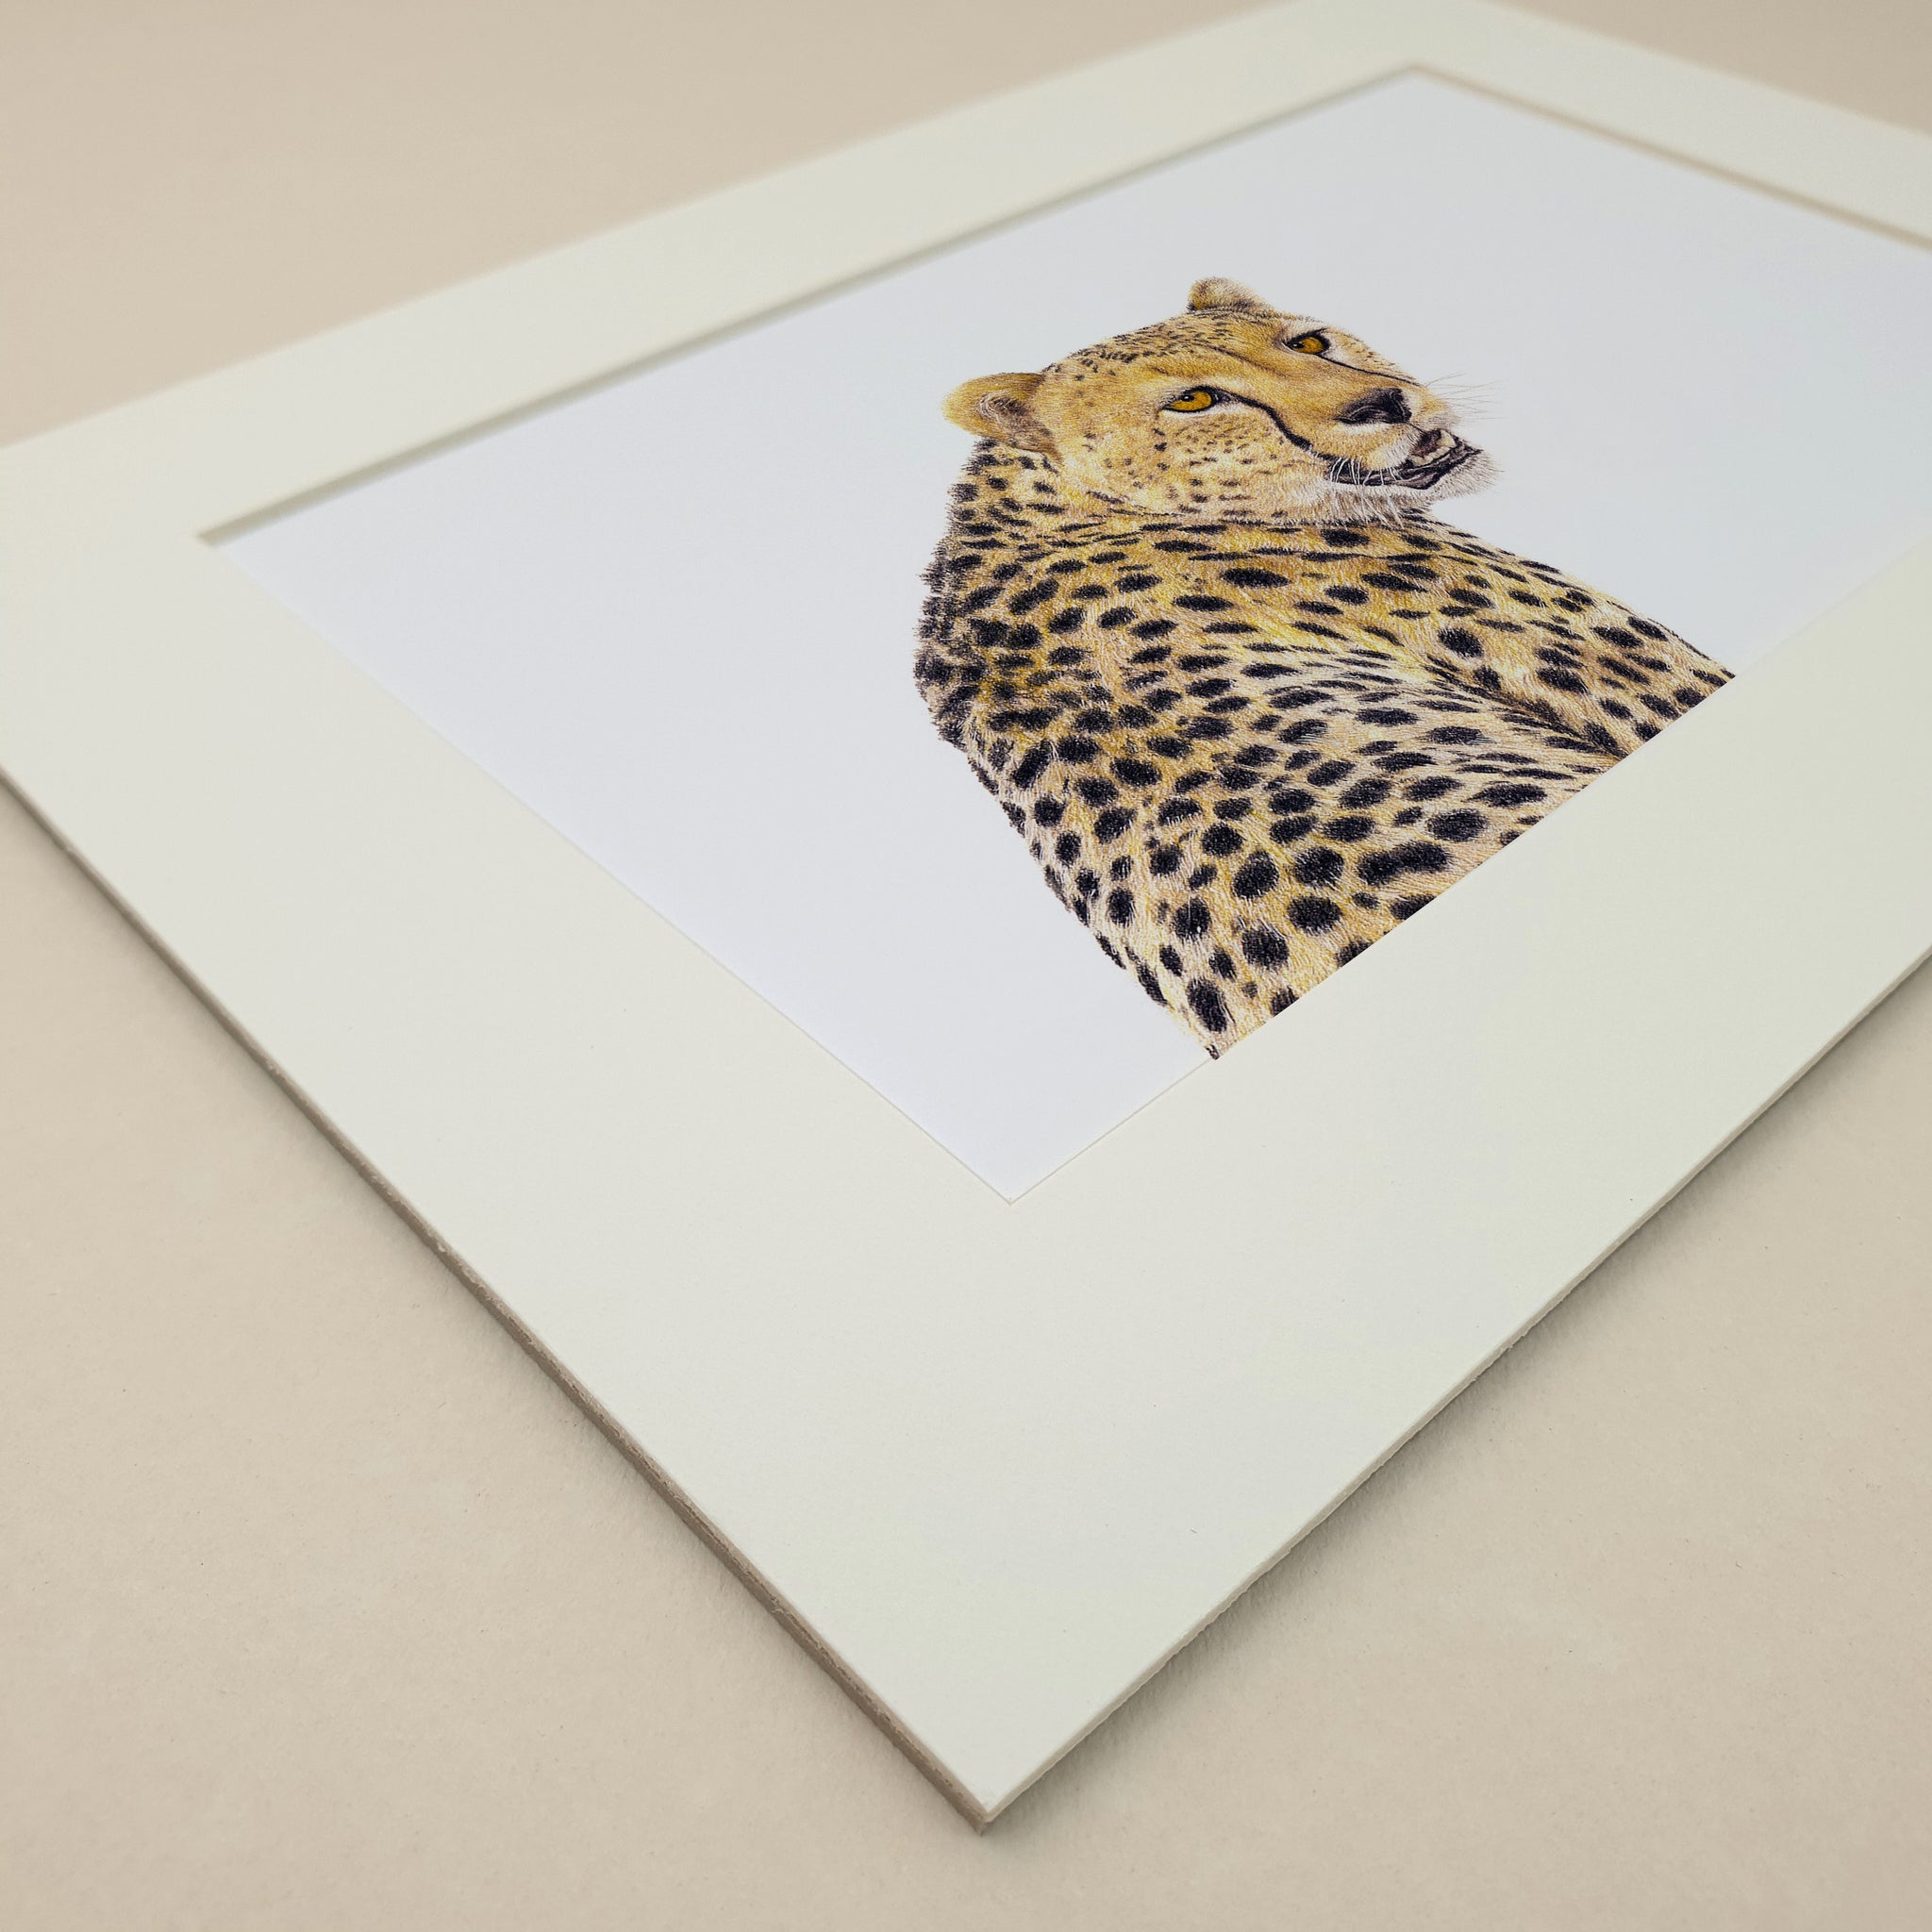 Cheetah portrait pencil artist